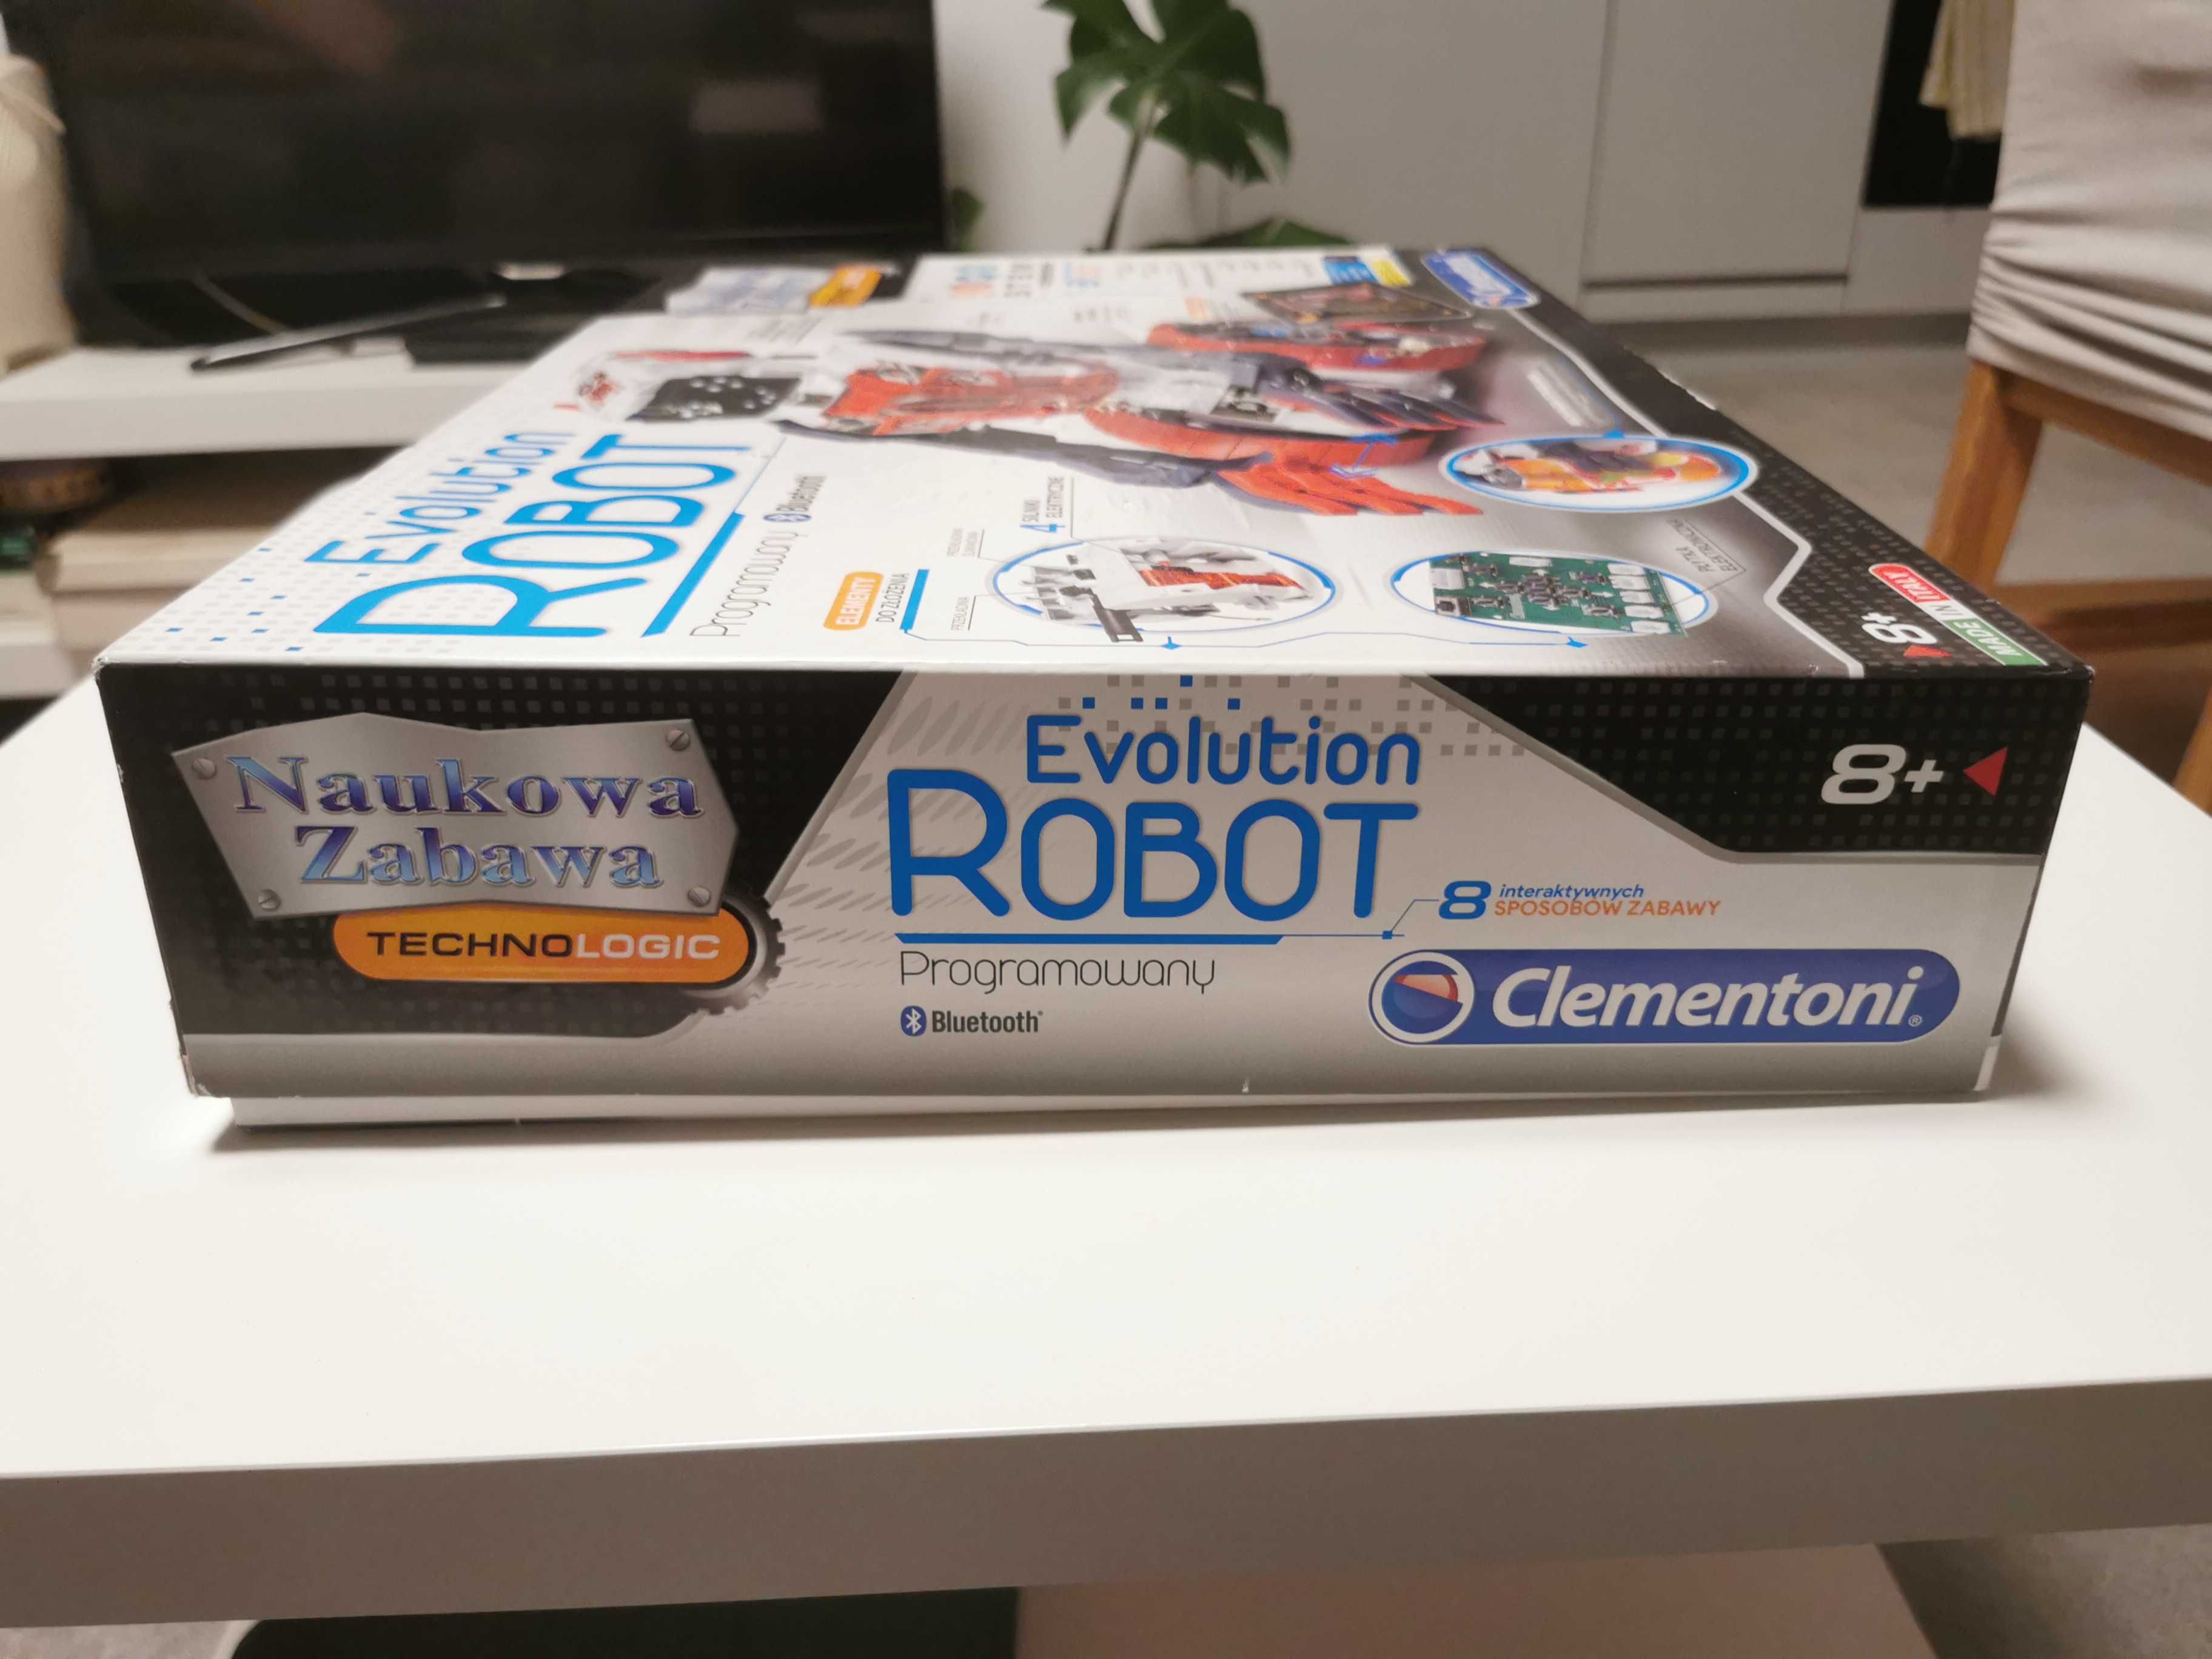 Clementoni Evolution Robot 8+ NOWY